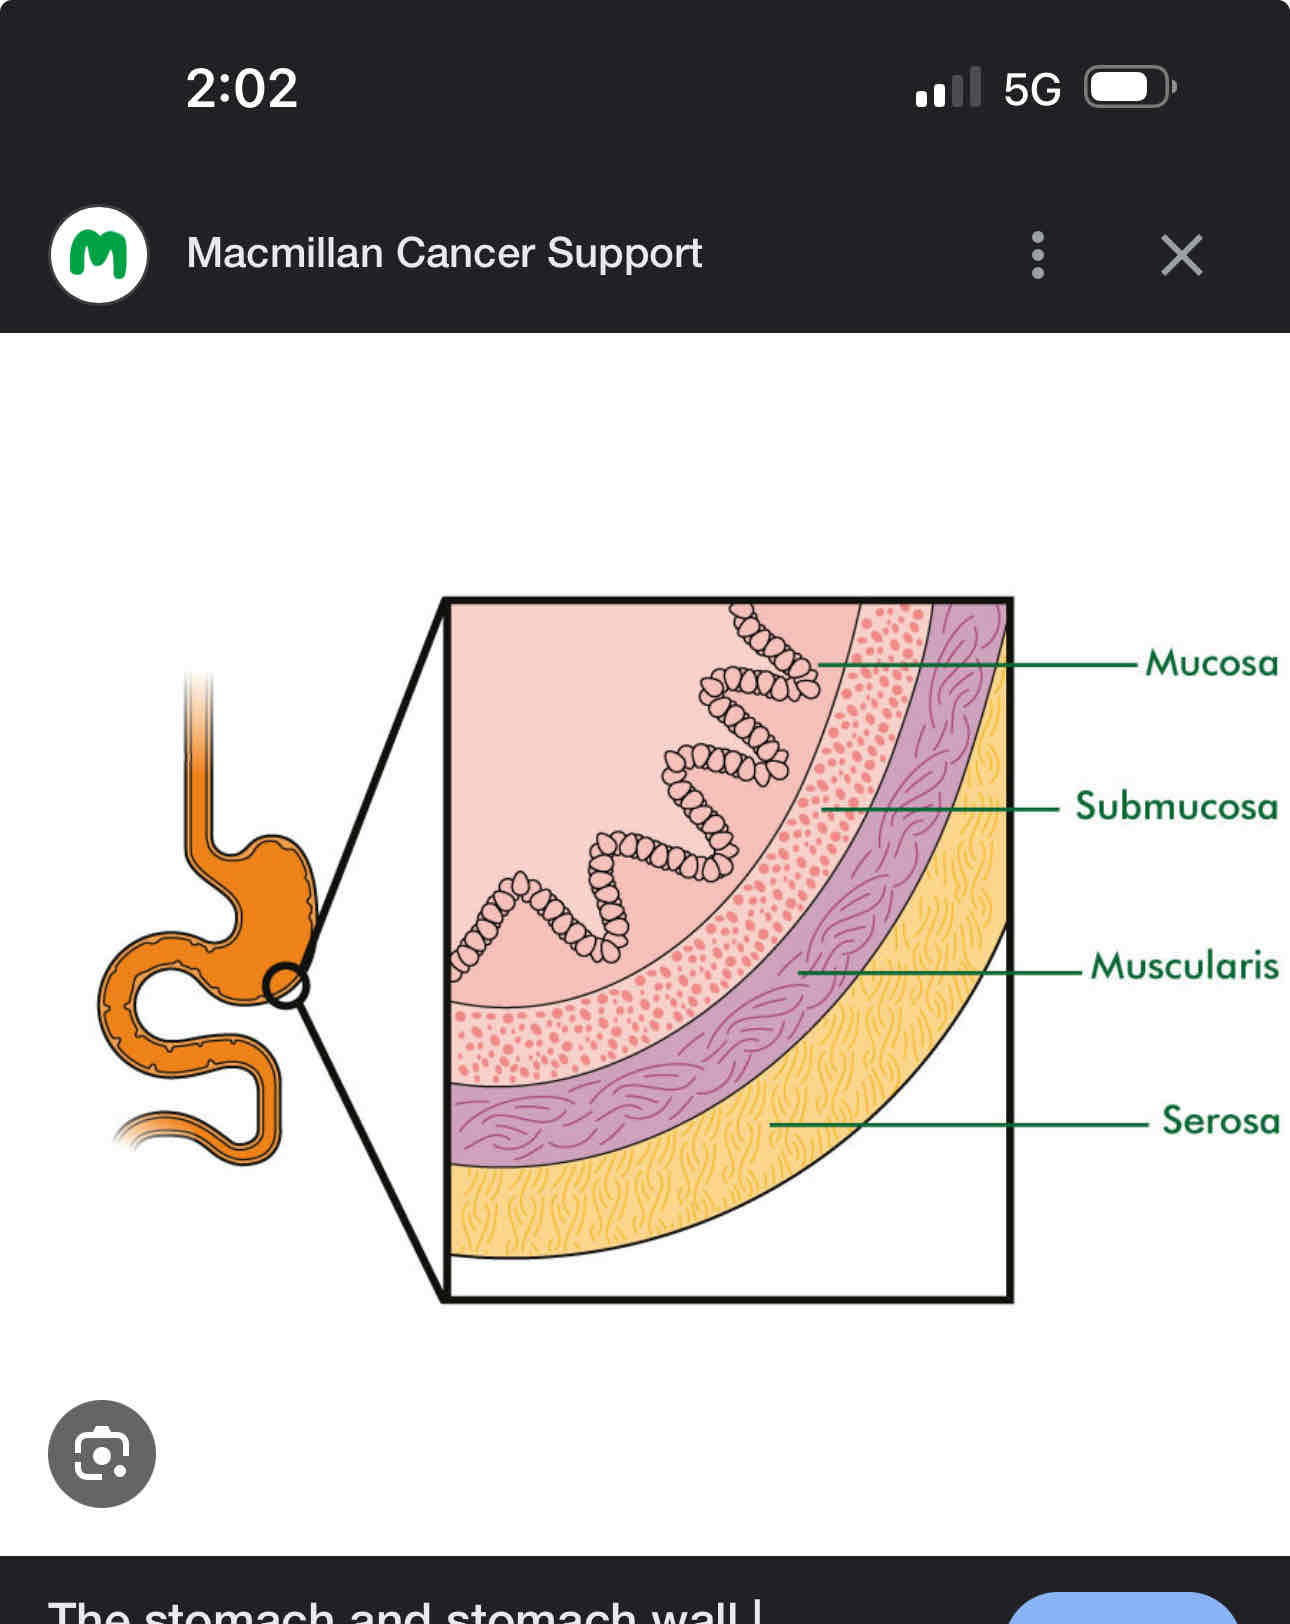 <ol><li><p>Mucosa- innermost layer</p></li><li><p>Submucosa- layer of connective tissues </p></li><li><p>Muscular- contains smooth muscle </p></li><li><p>Serosa-outermost layer hold stomach in place</p></li></ol><p></p>